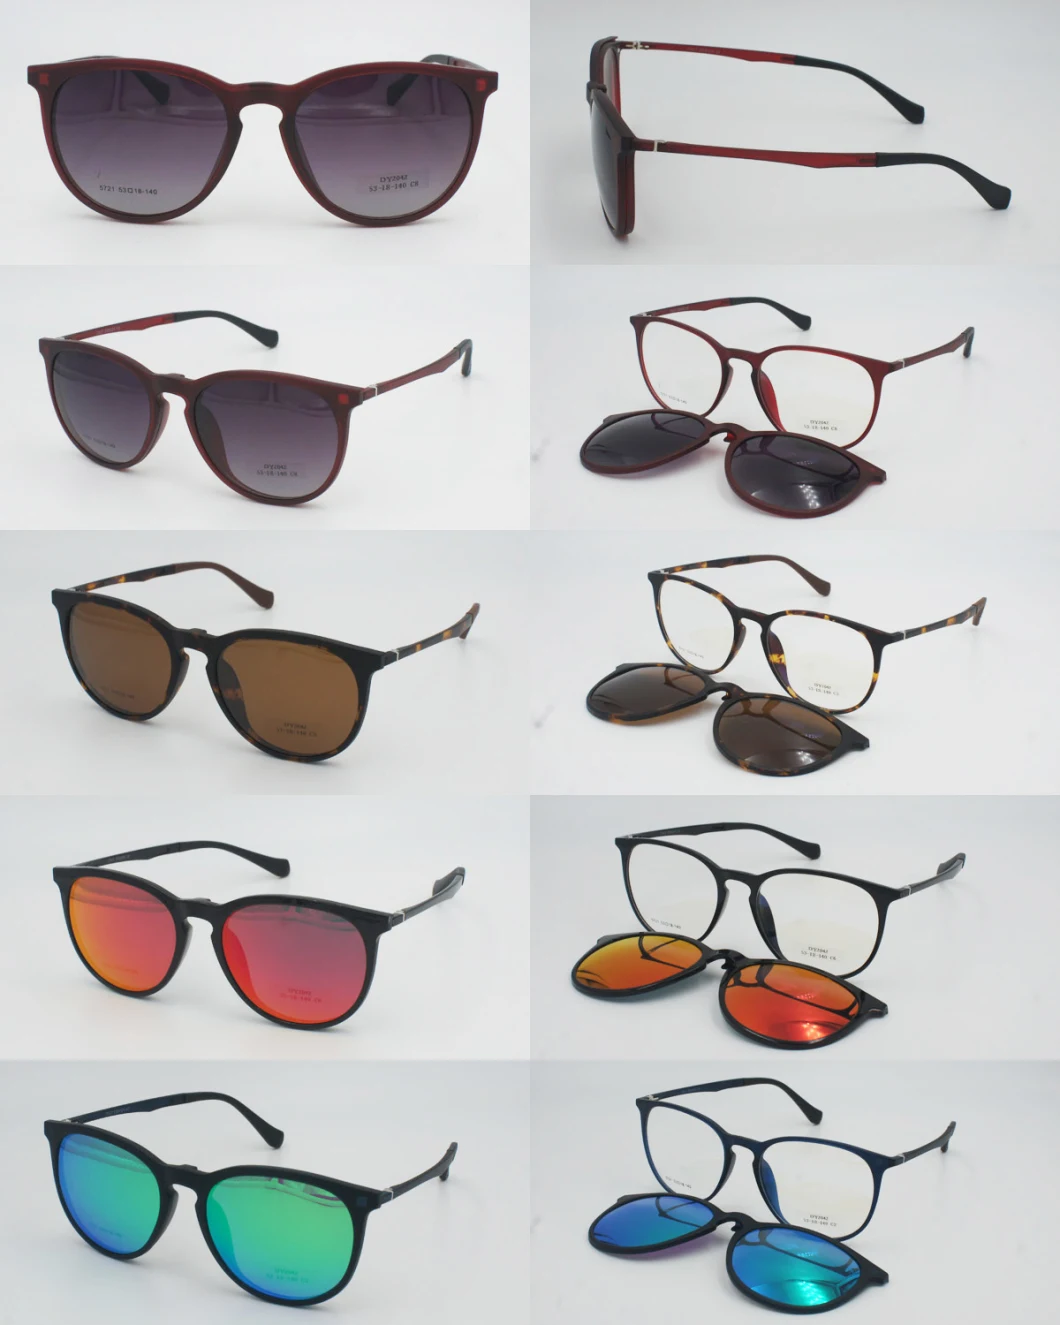 2020 Fashion Round Clip on Glasses Sunglasses Polarized